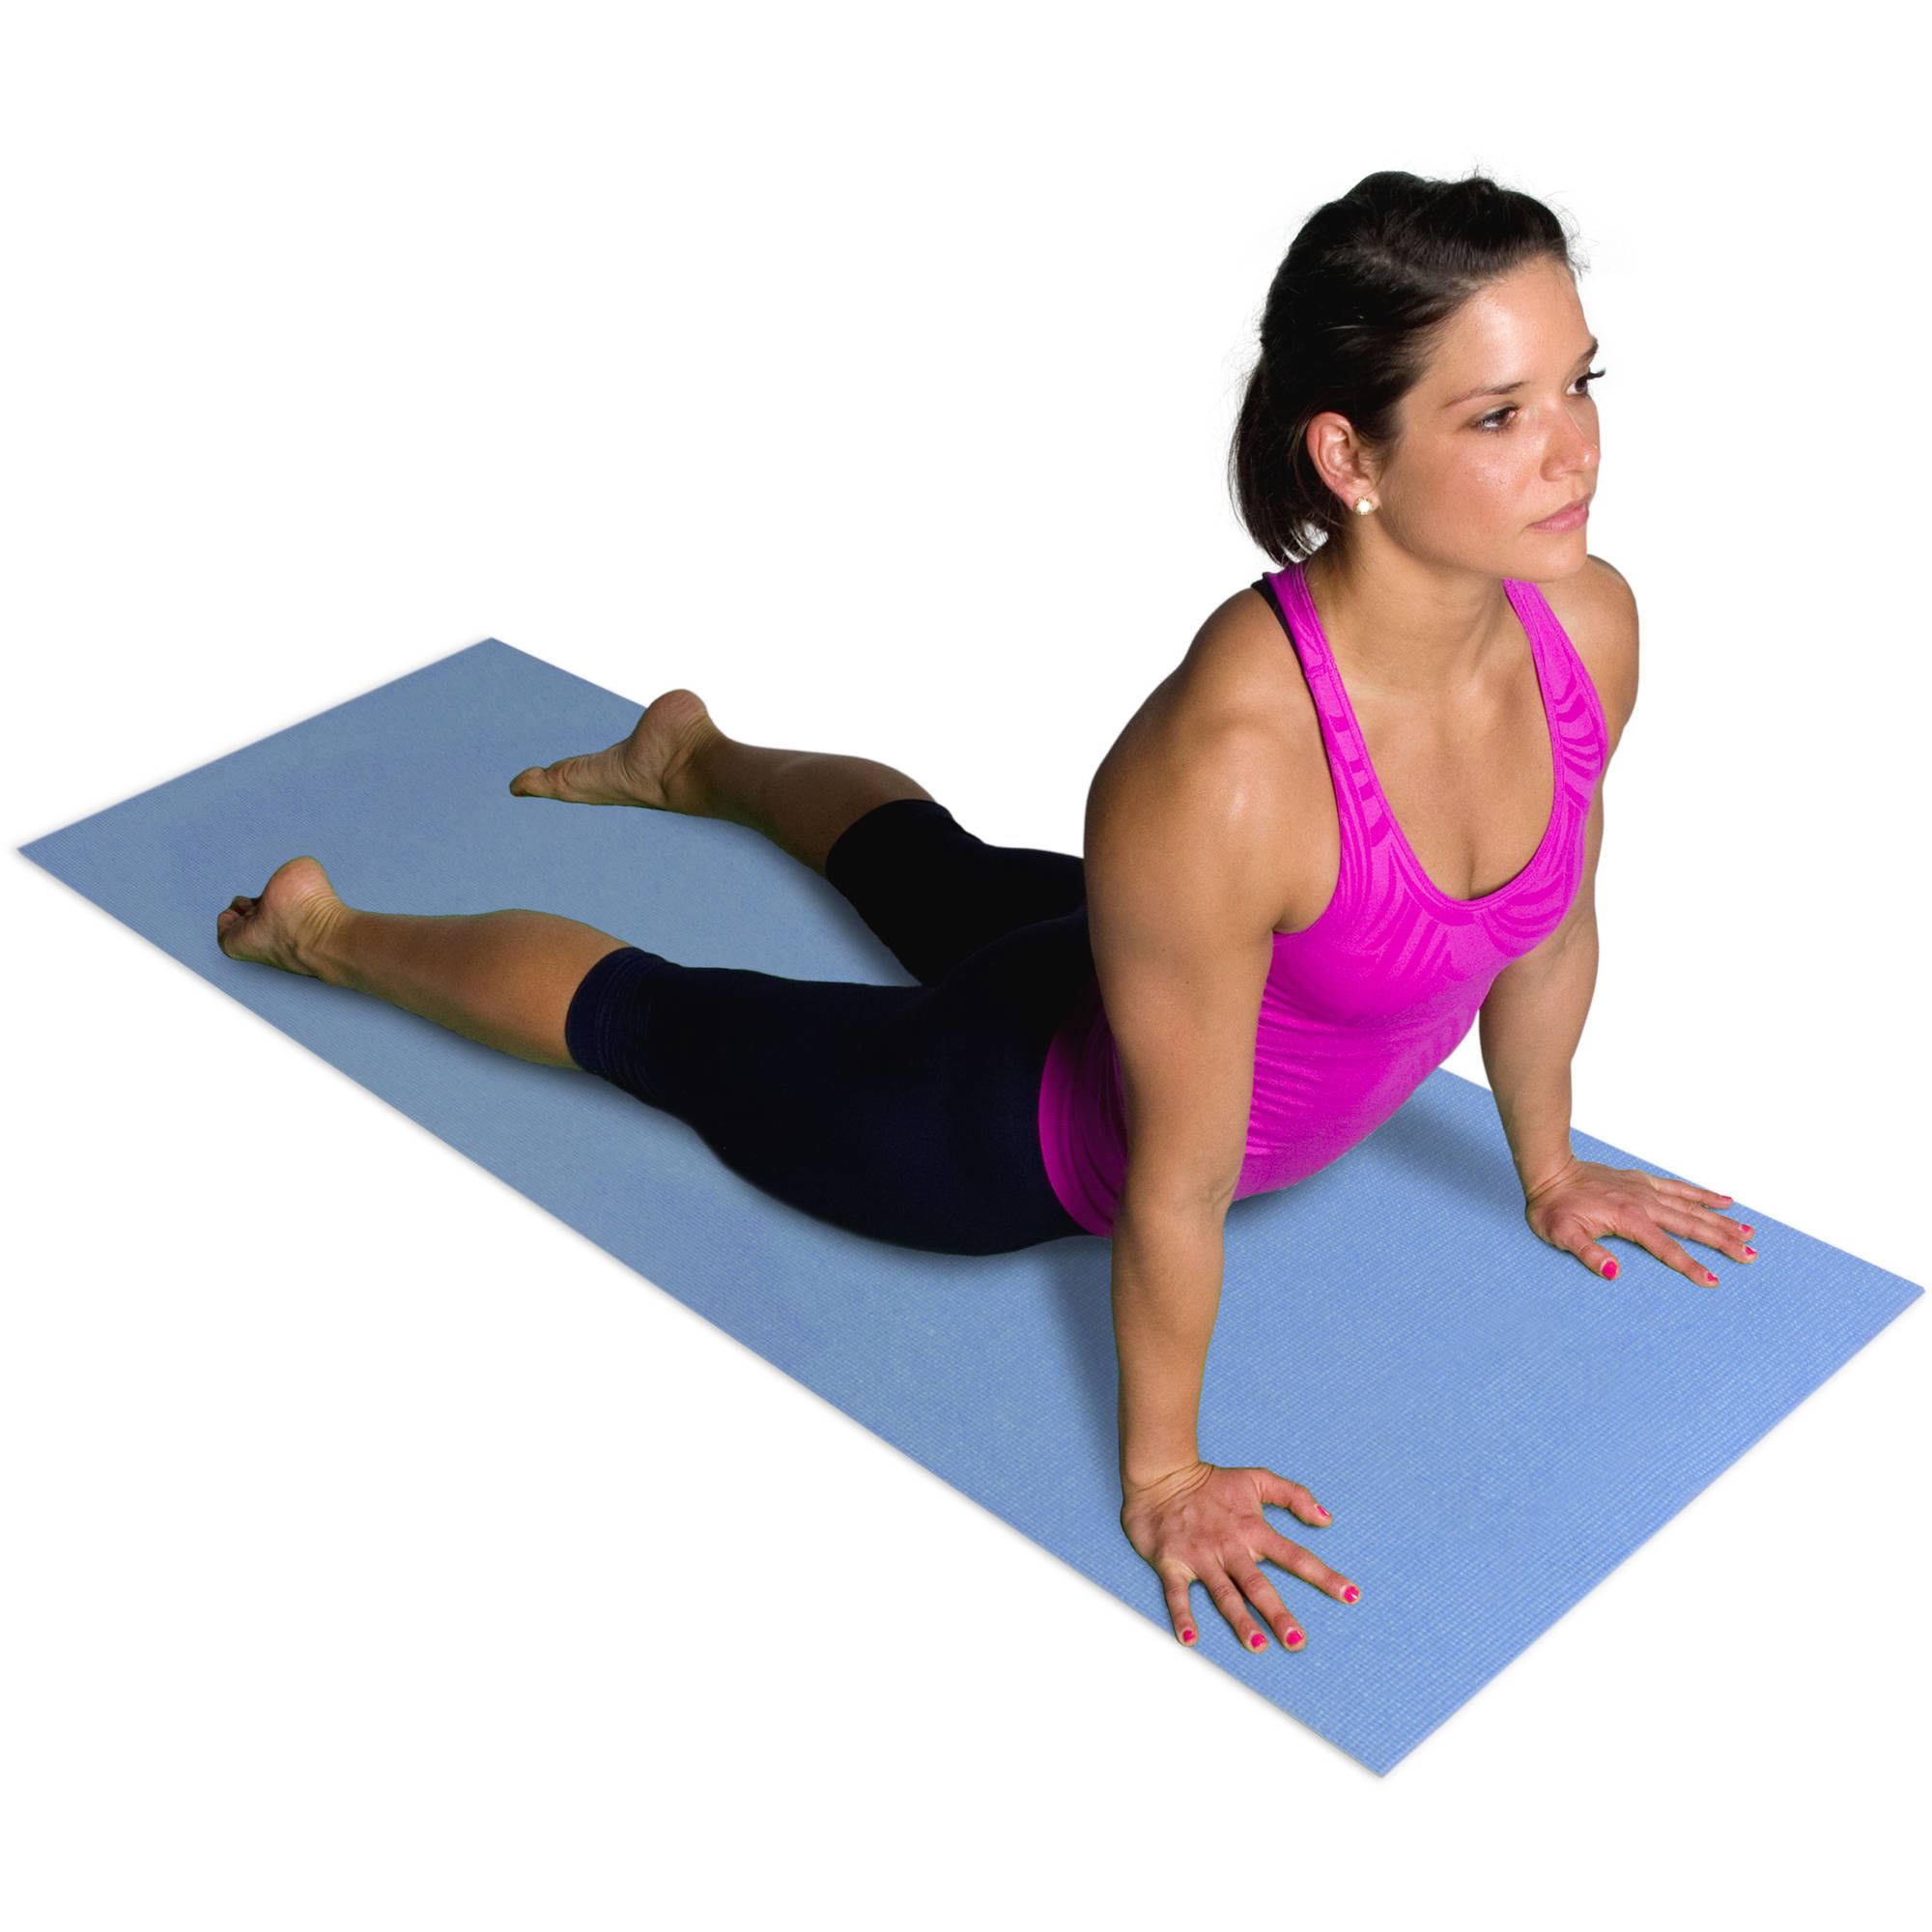 A model using the blue yoga mat